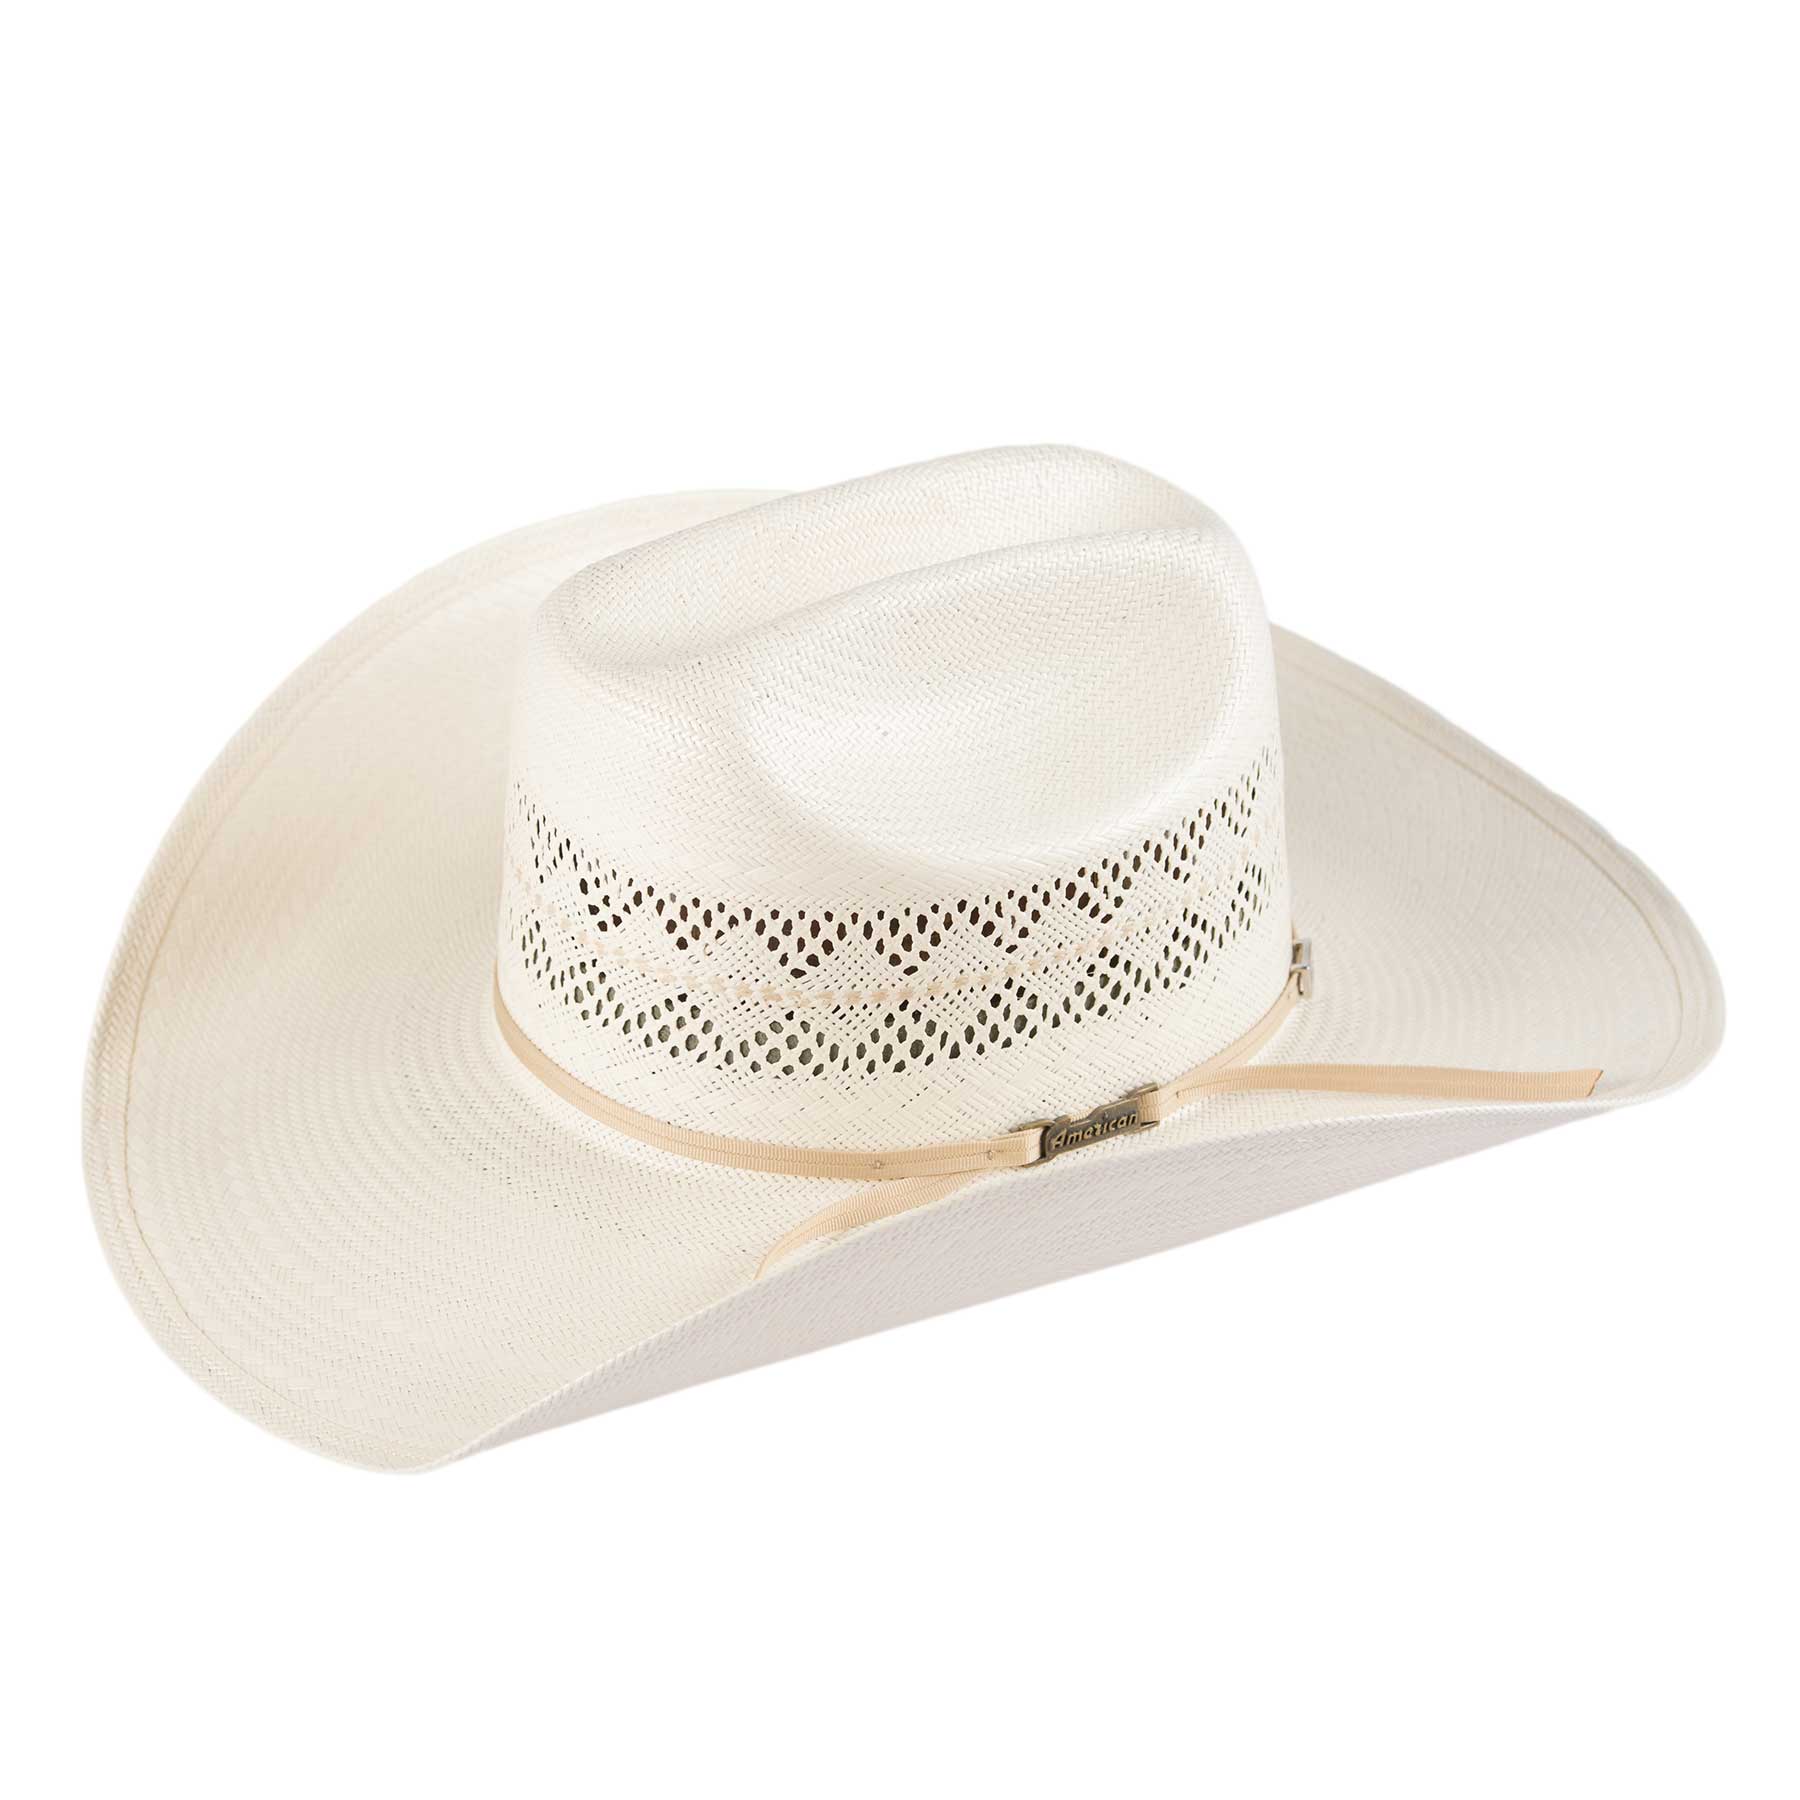 Pungo Ridge - American Hat Co 6800 Diamond Weave Straw Hat - Ivory